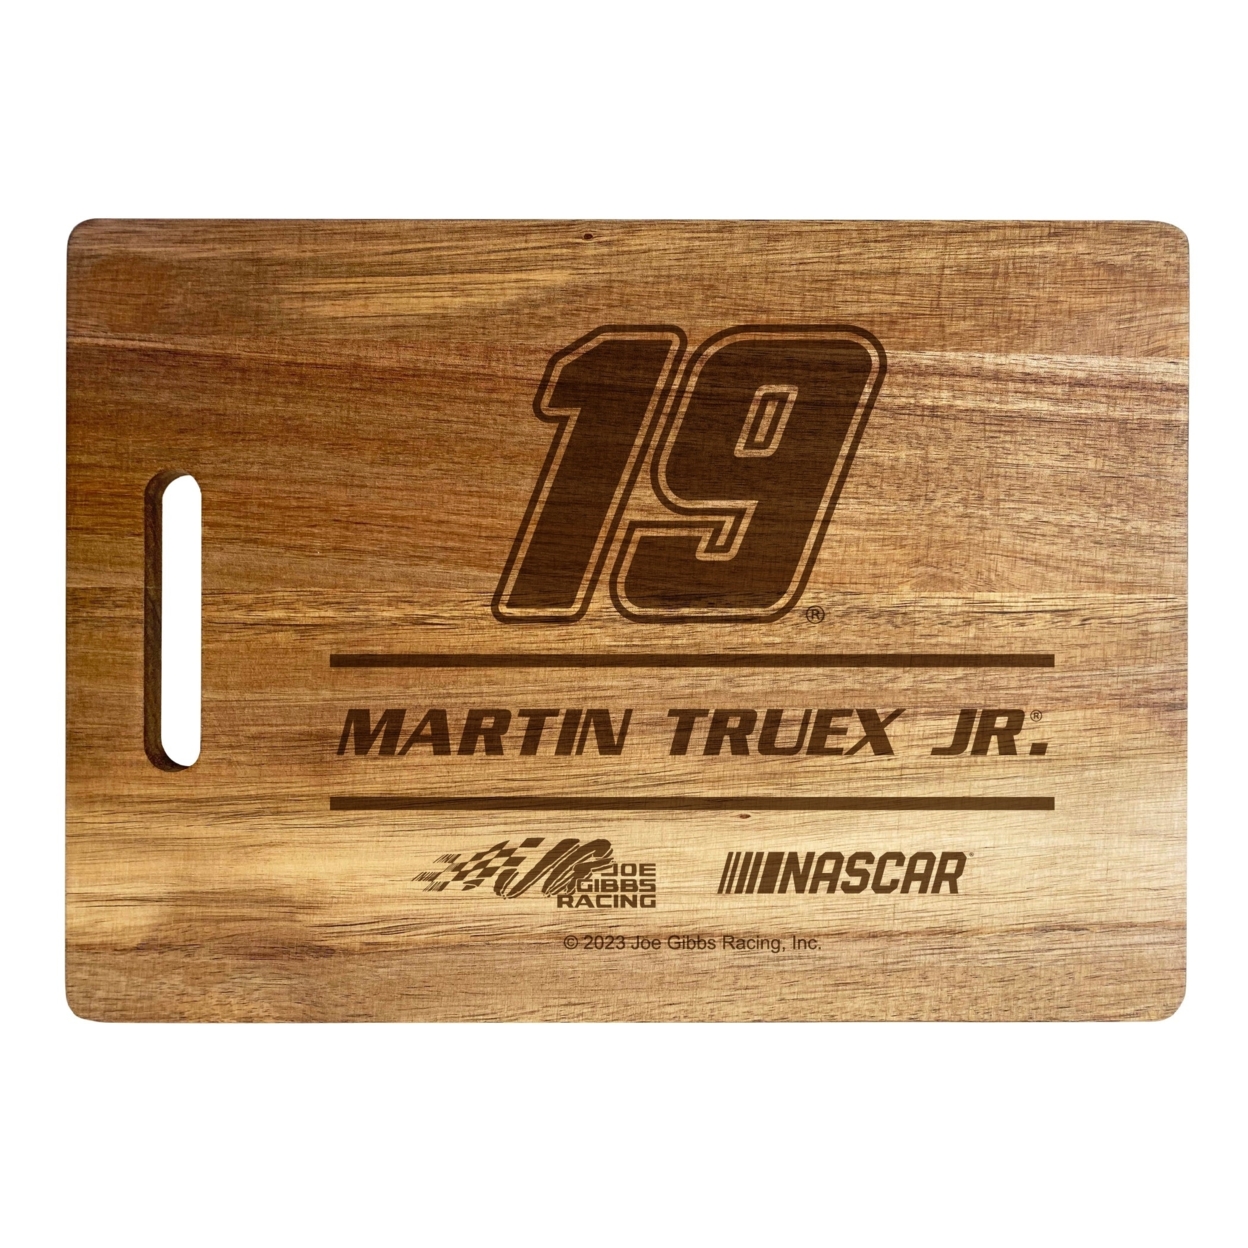 #19 Martin Truex Jr. NASCAR Officially Licensed Engraved Wooden Cutting Board